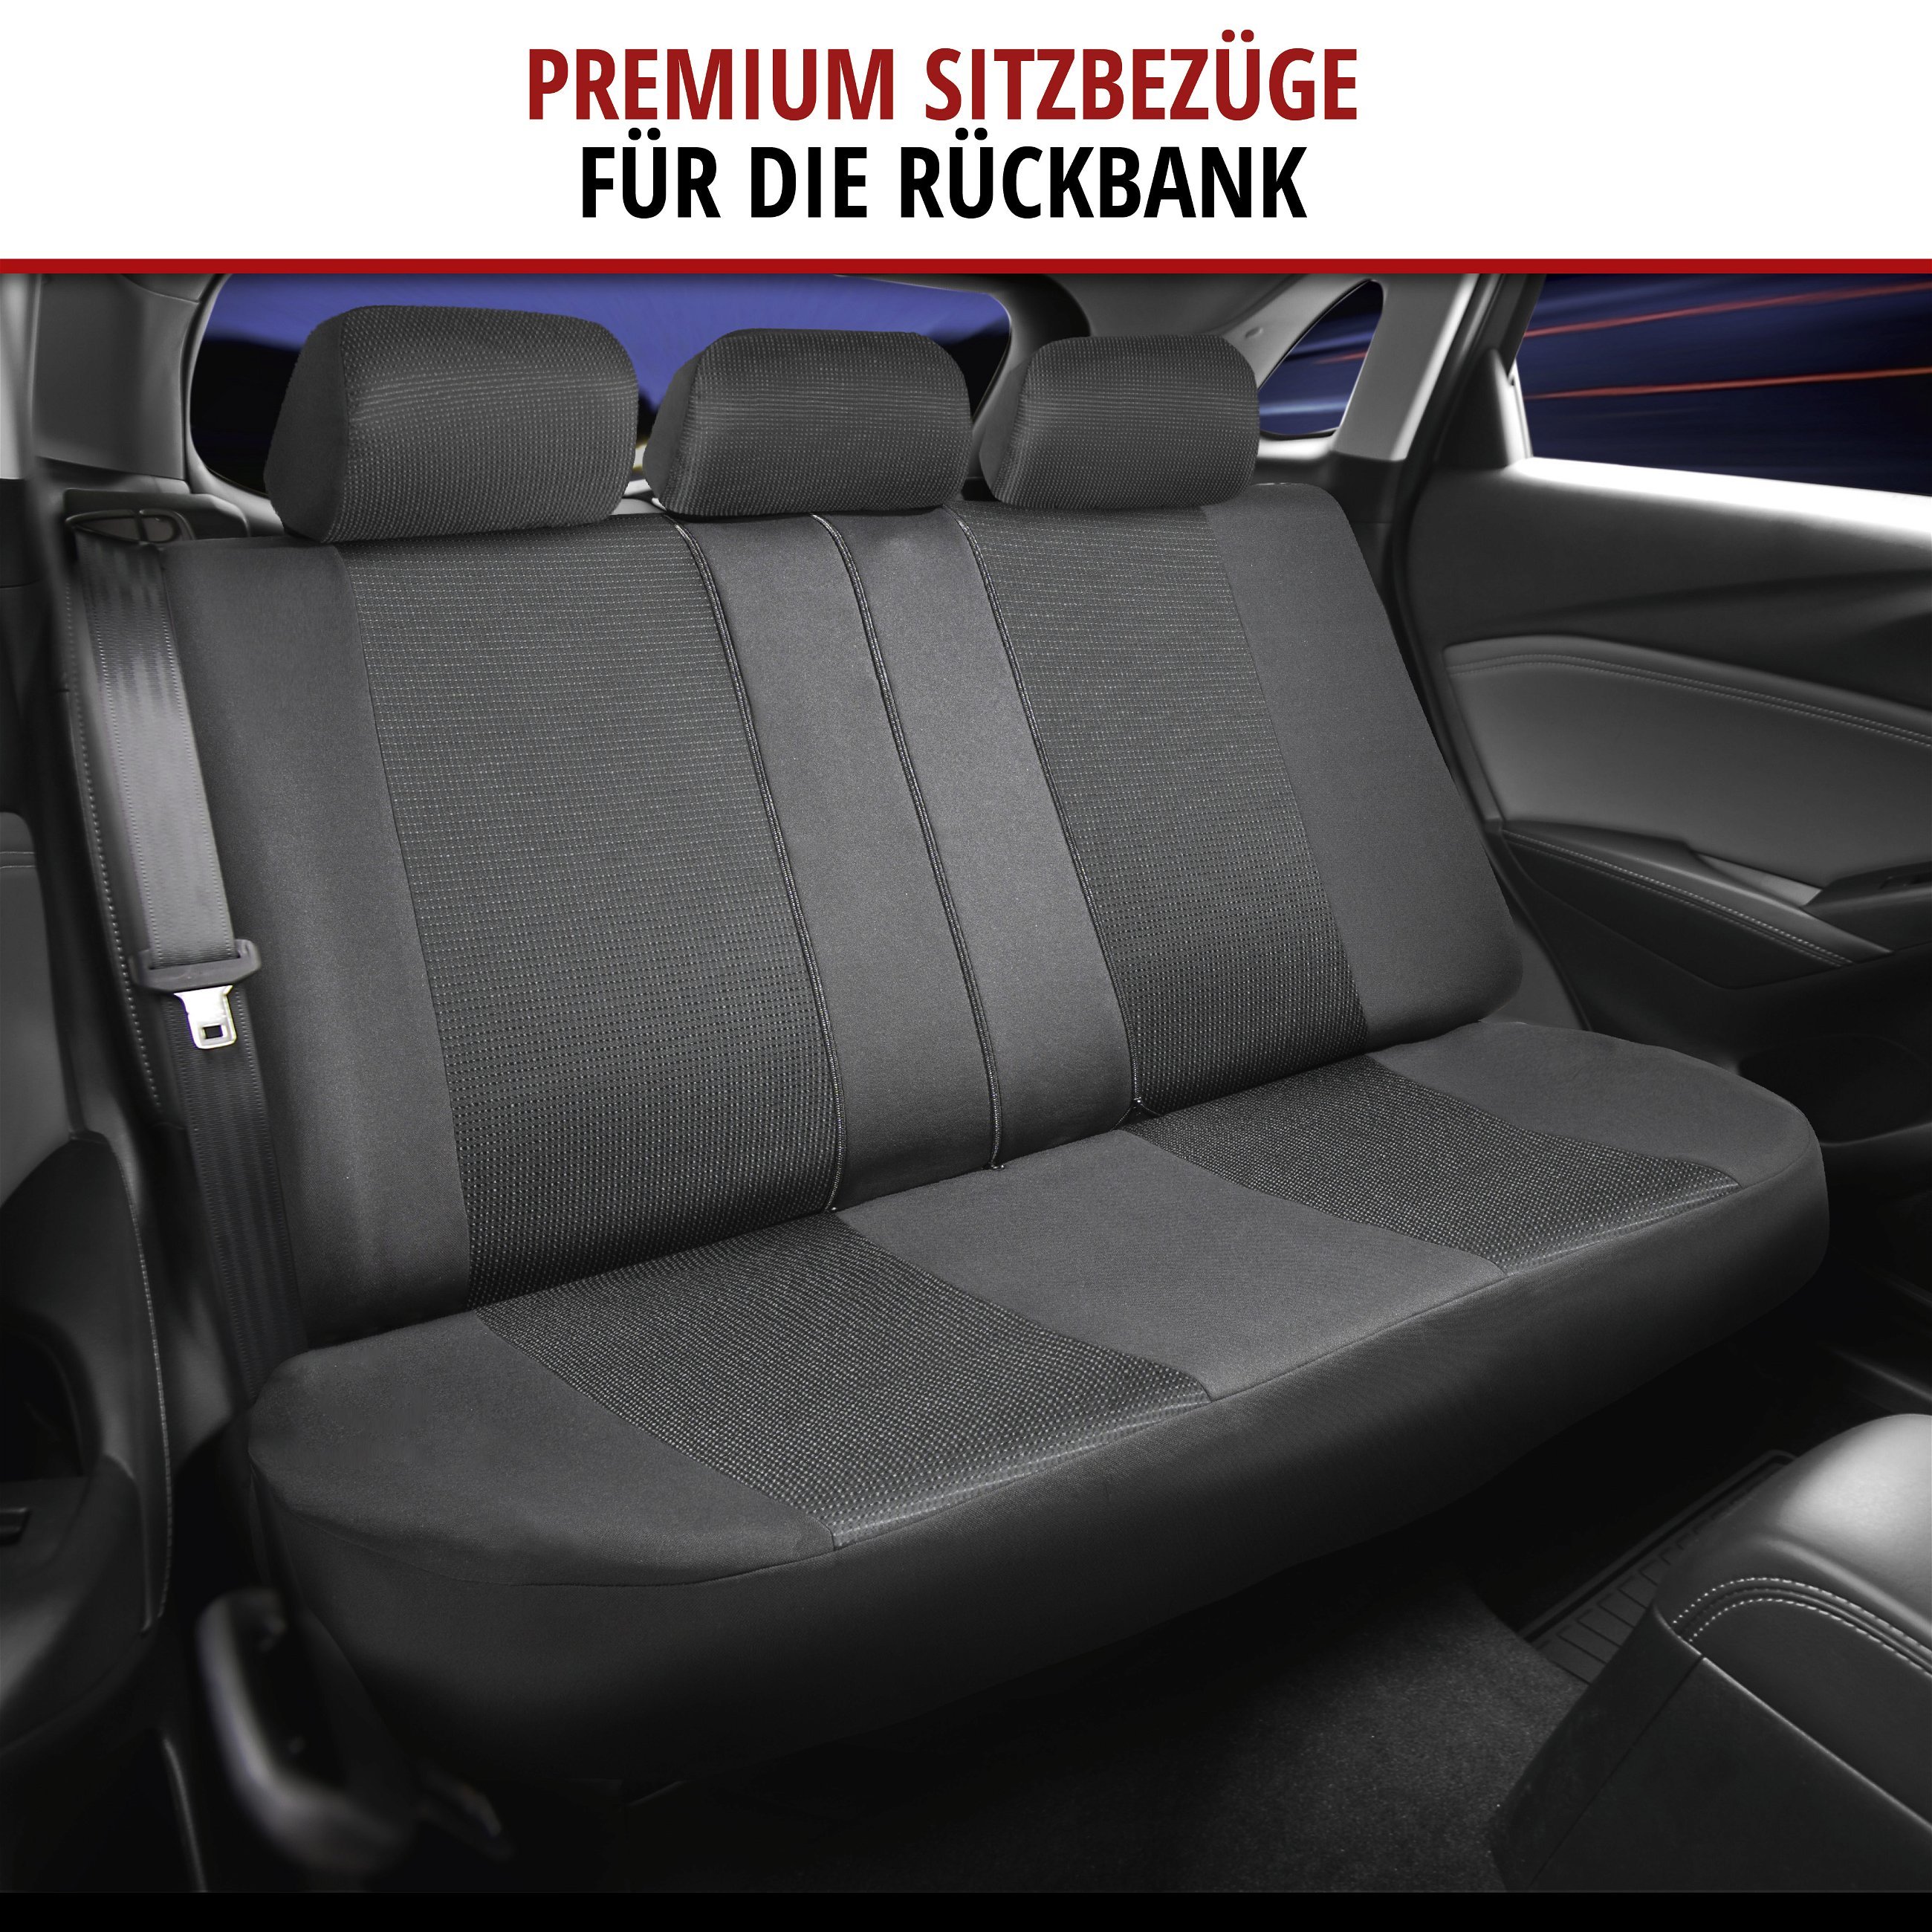 ZIPP IT Premium Esprit Autositzbezüge Komplettset mit  Reißverschluss-System, Highbacksitze, Stoff Sitzbezüge, Sitzbezüge und  Sitzauflagen für PKWs, Autositzbezüge & Auflagen